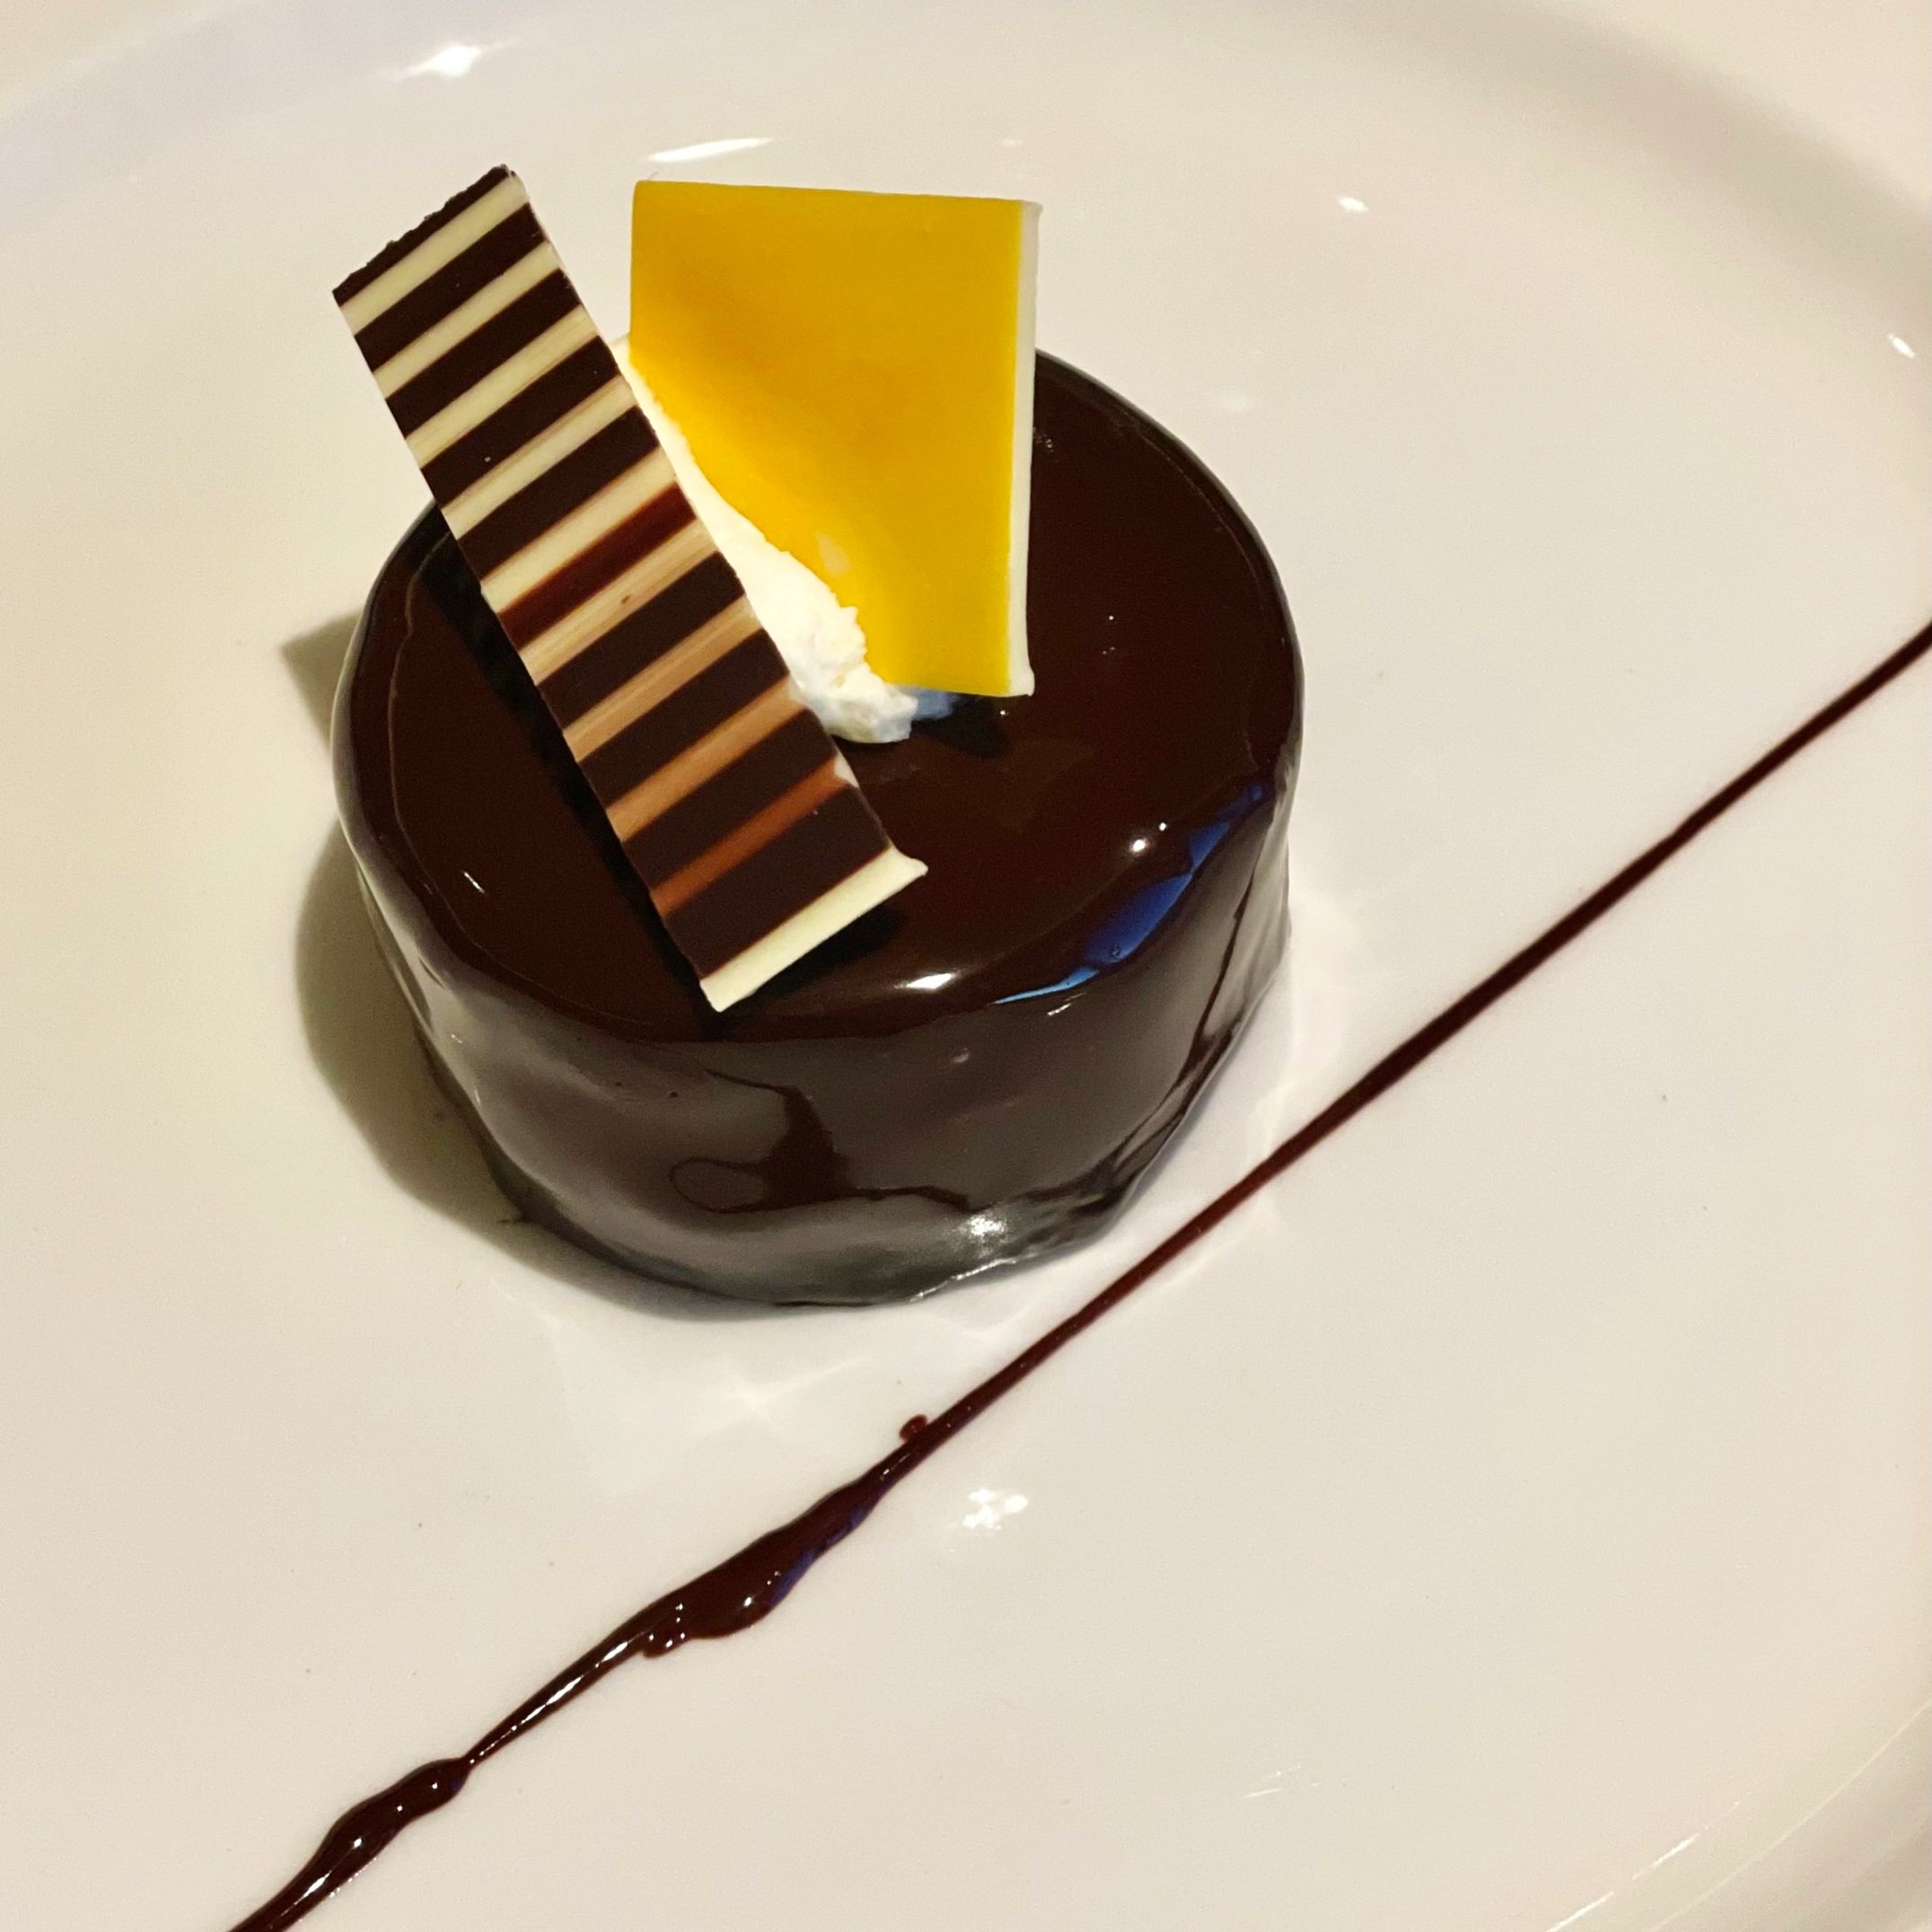 Chocolate journey dessert